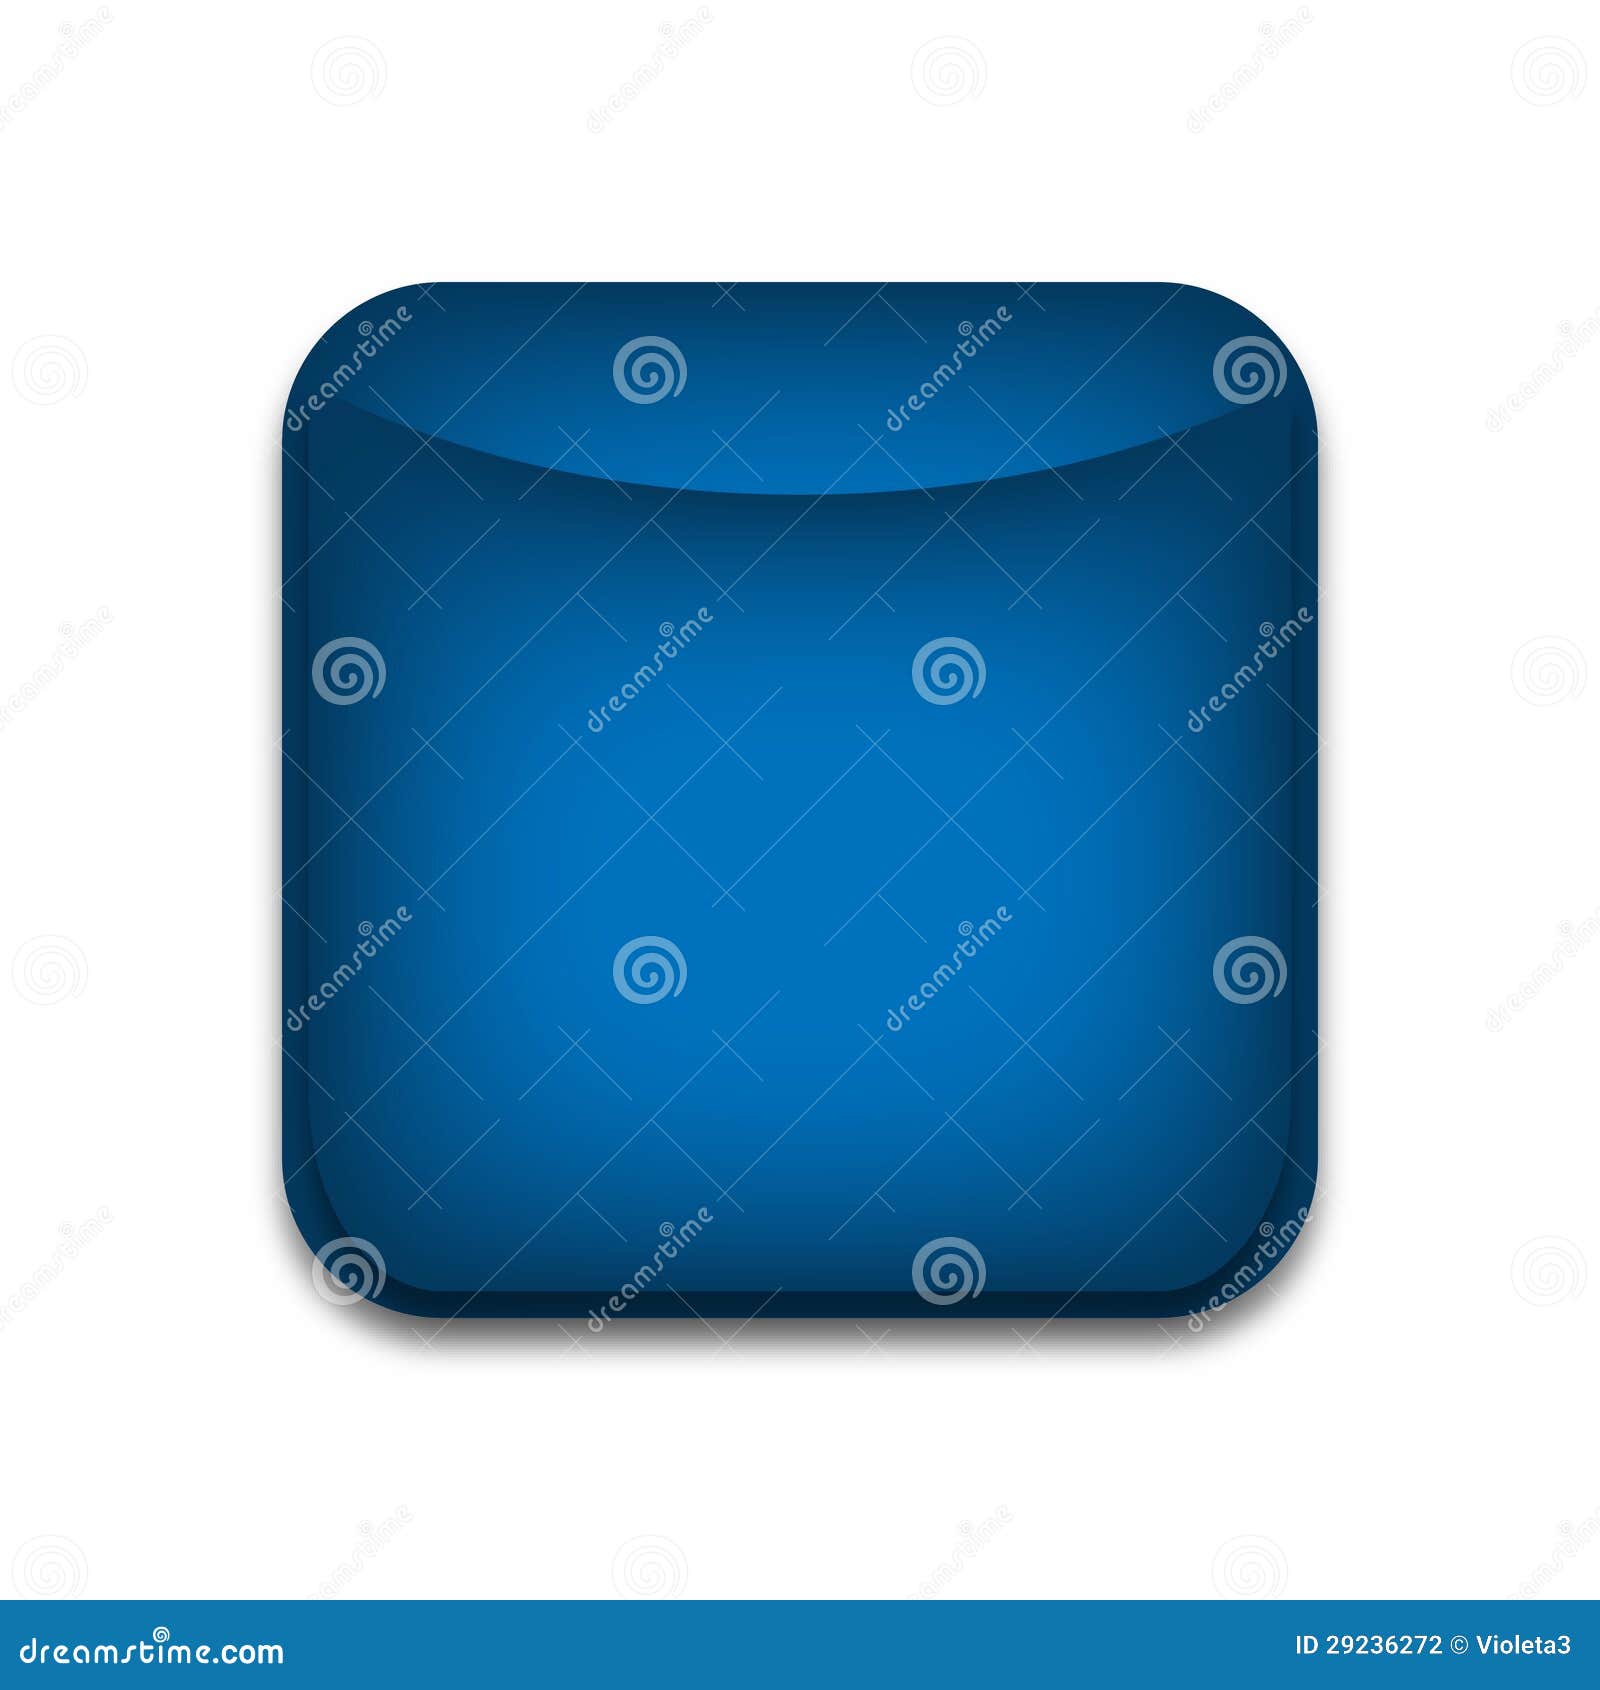 web blank blue button